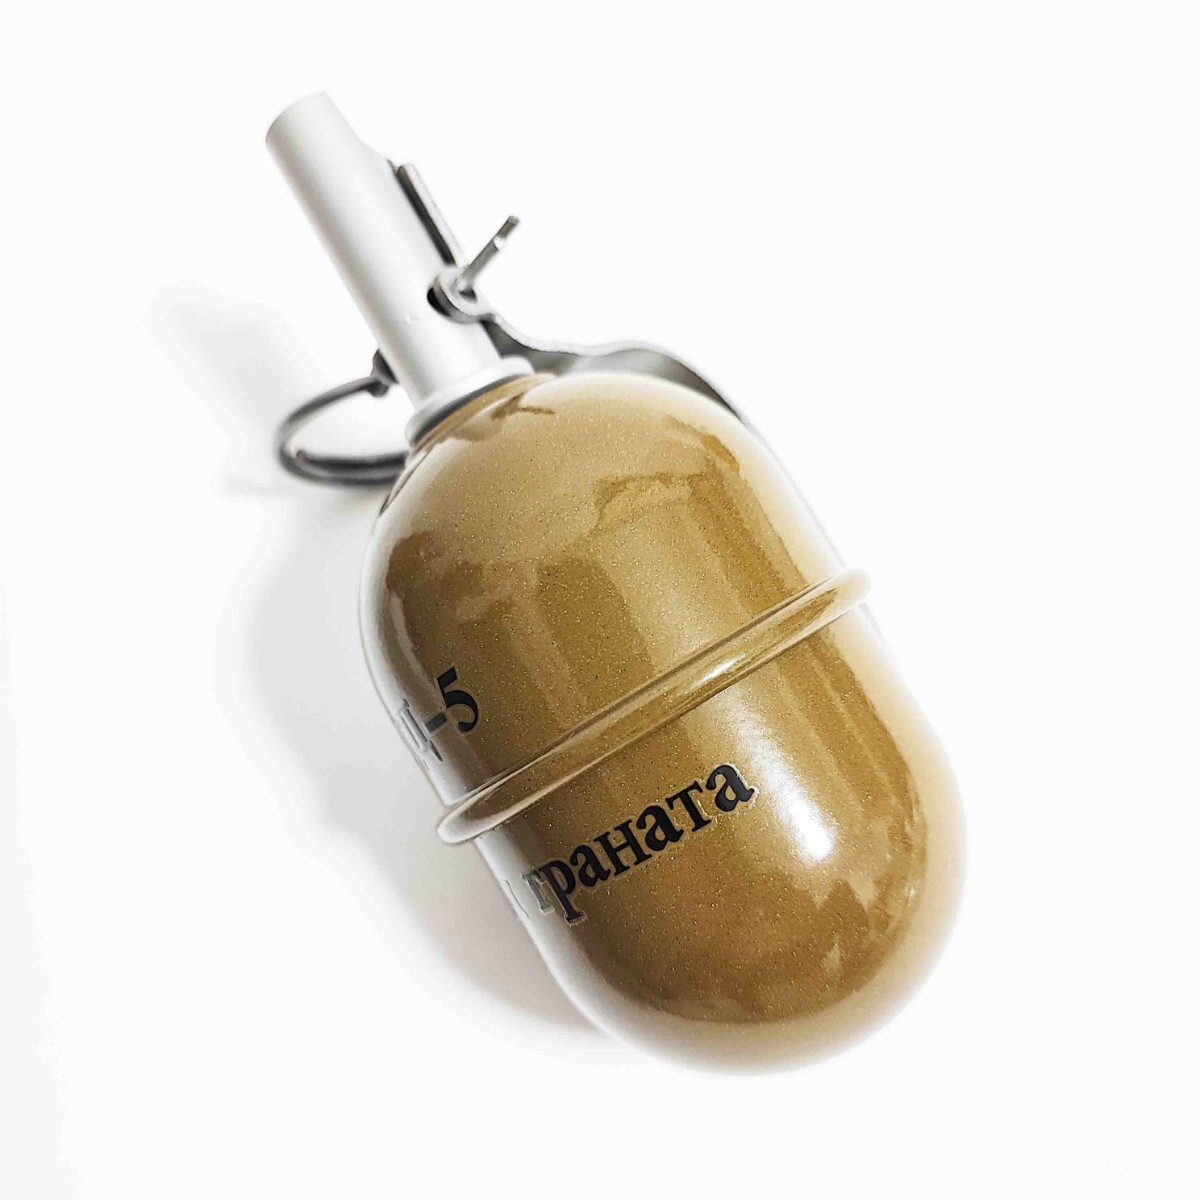 【Yes.Sir shop】 ロシア軍 ソ連軍 RGD-5 手榴弾 MGS グレネード アルミ合金製 グリーン 新品未使用の画像3